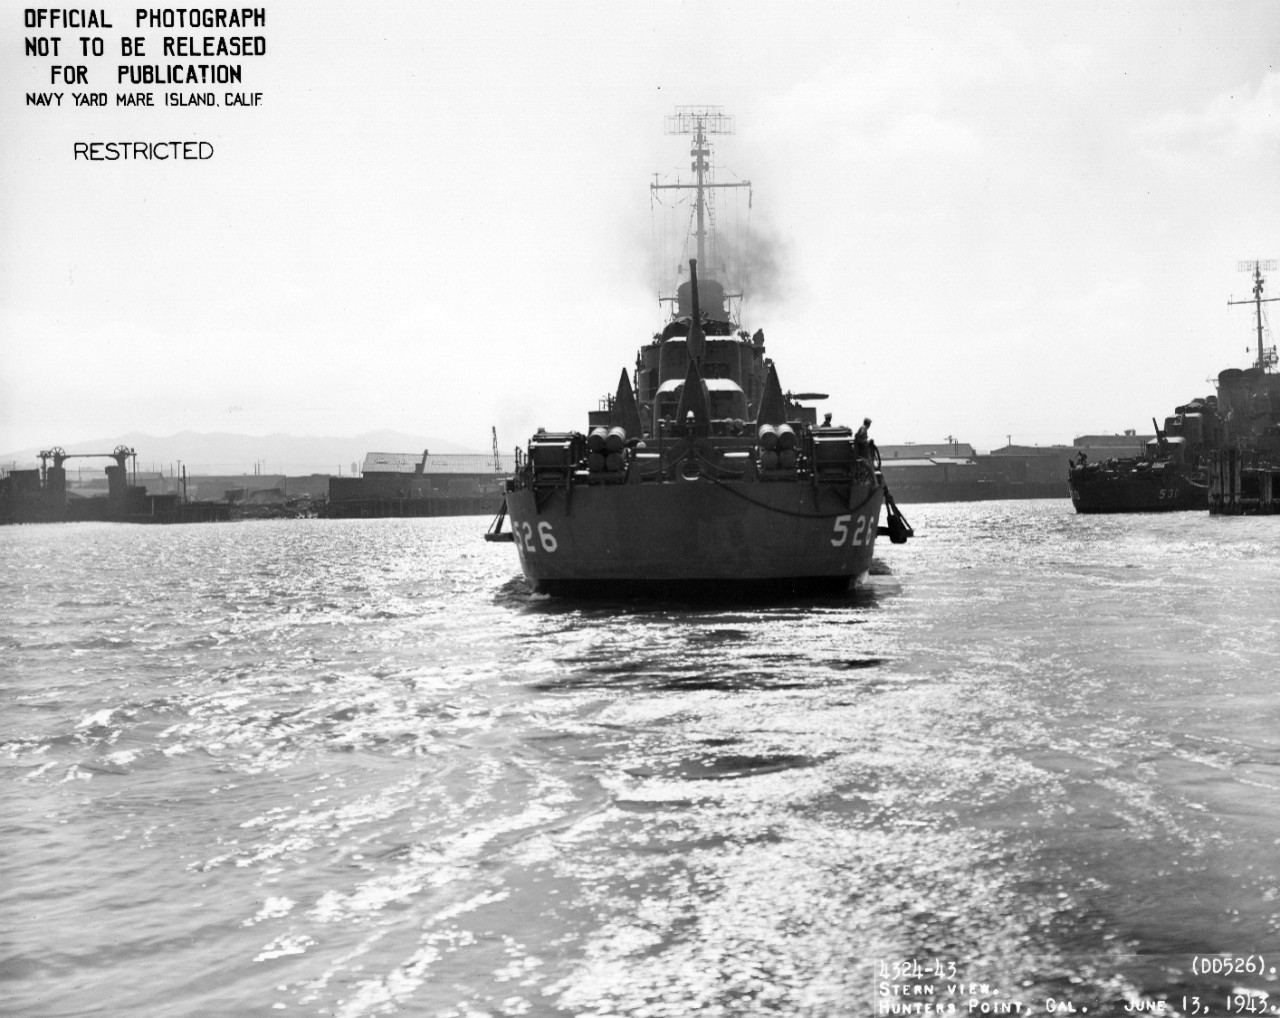 L45-01.01.02 USS Abner Read (DD 526)